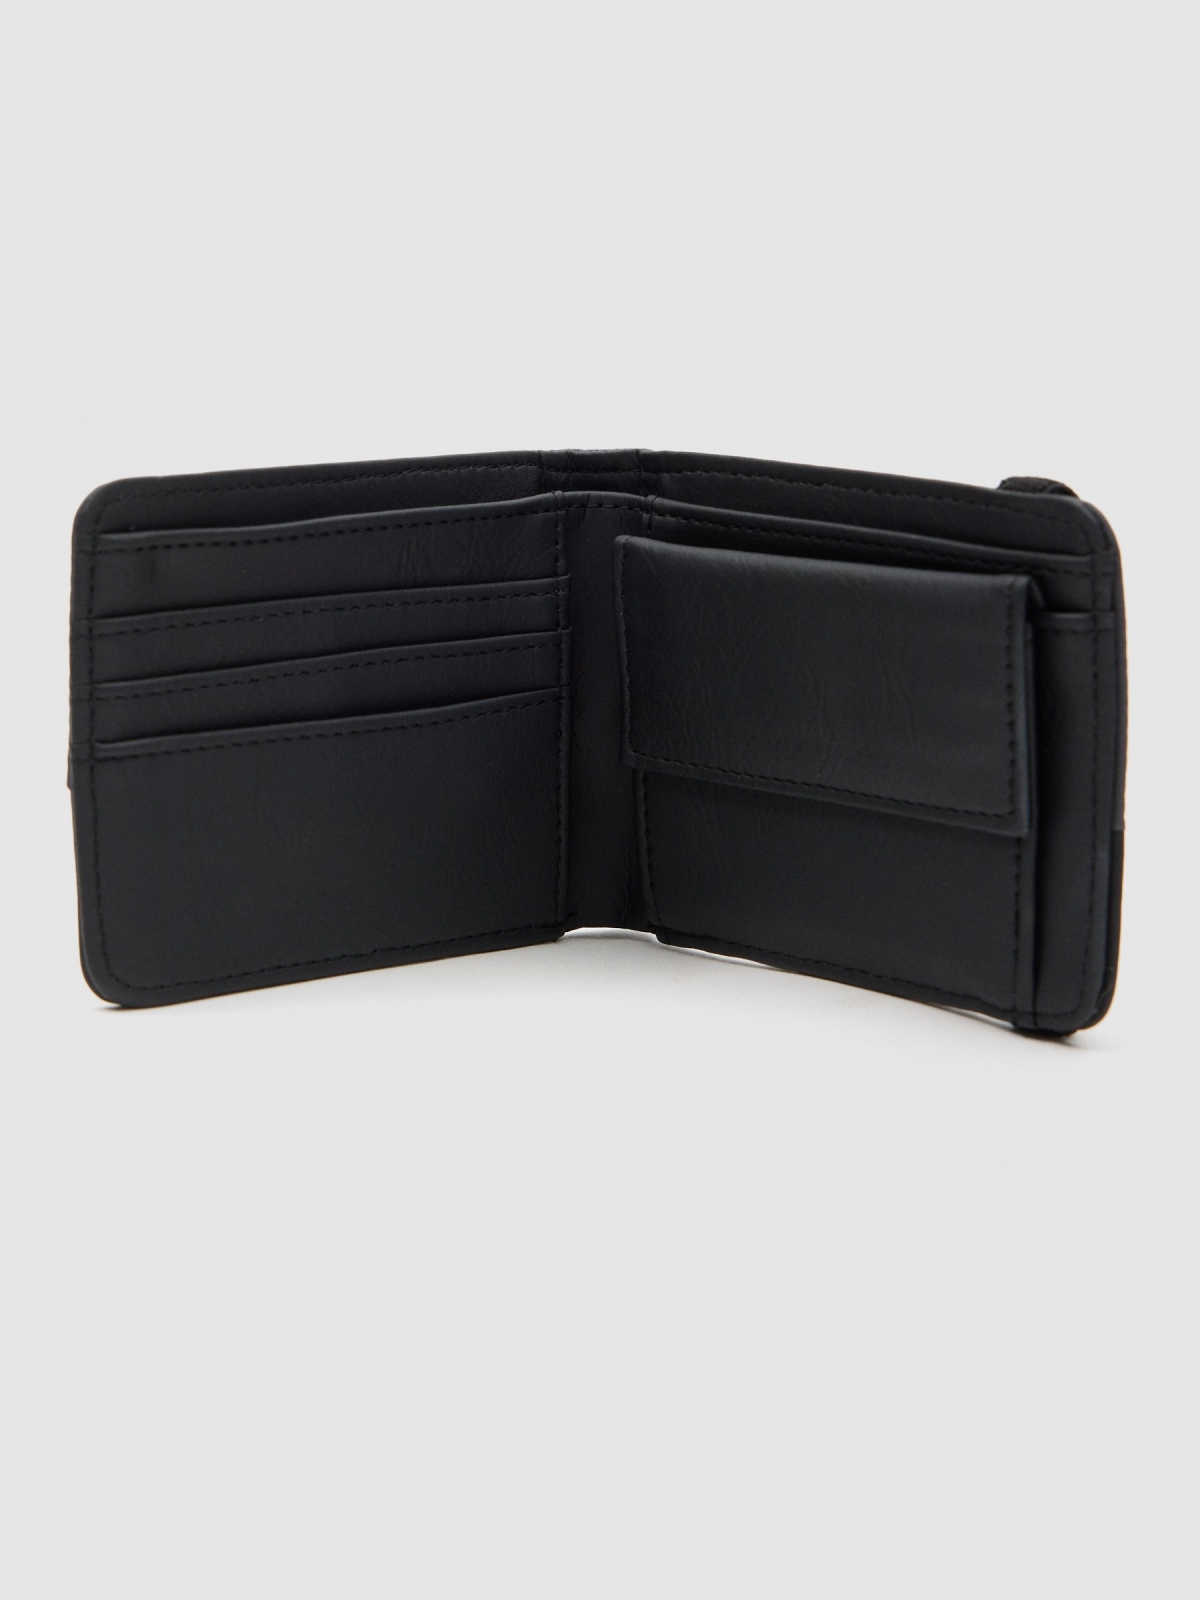 Wallet elastic clasp grey detail view